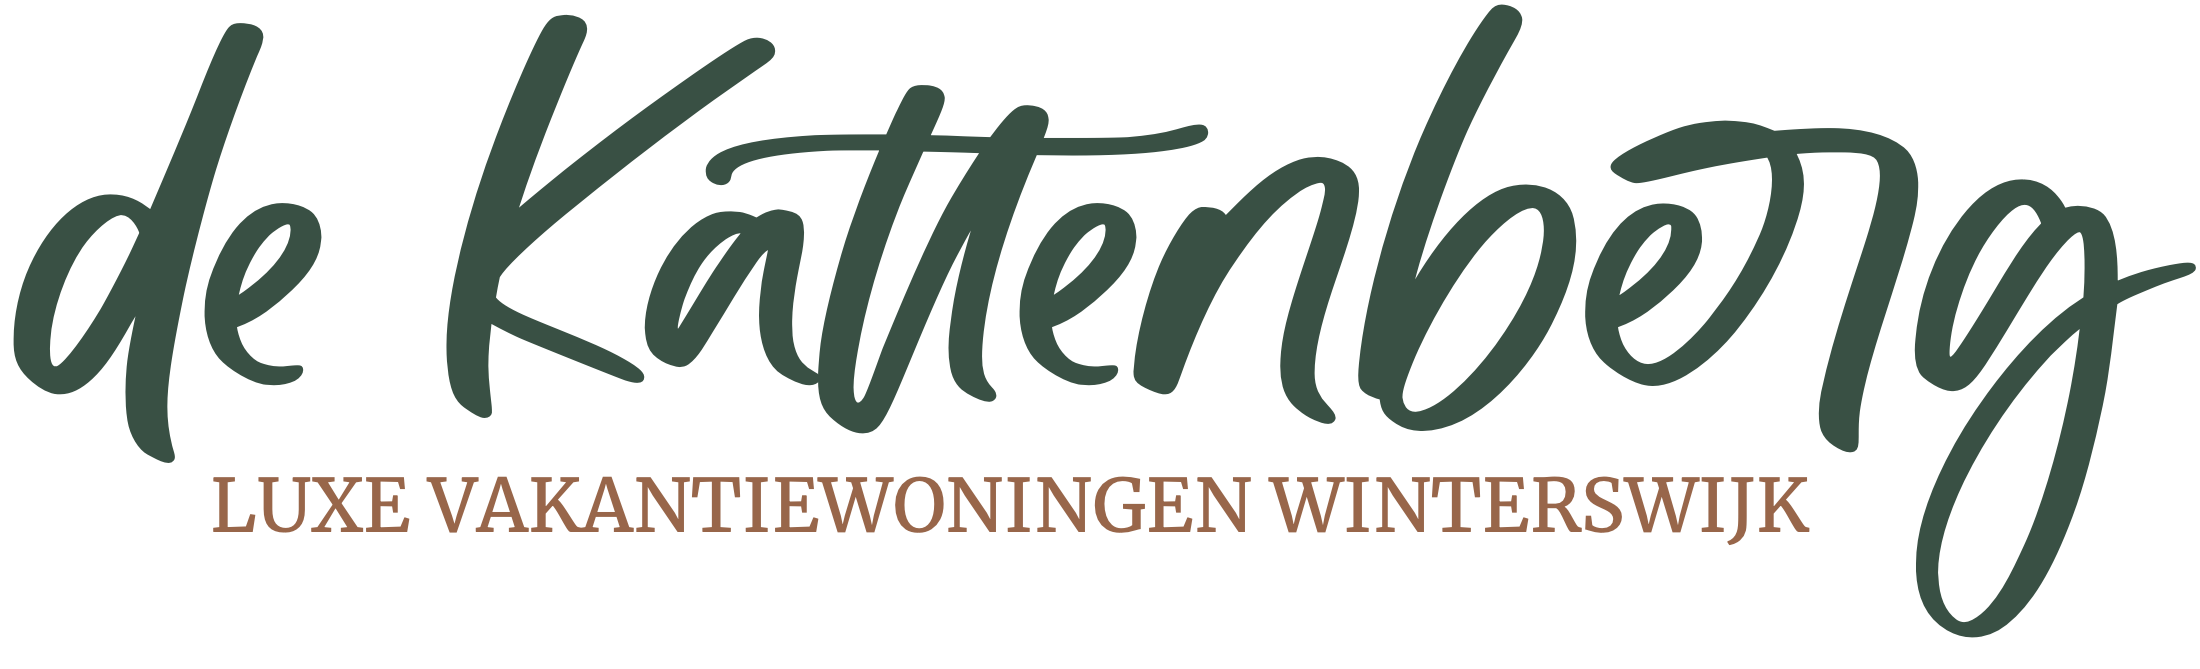 De Kattenberg Winterswijk